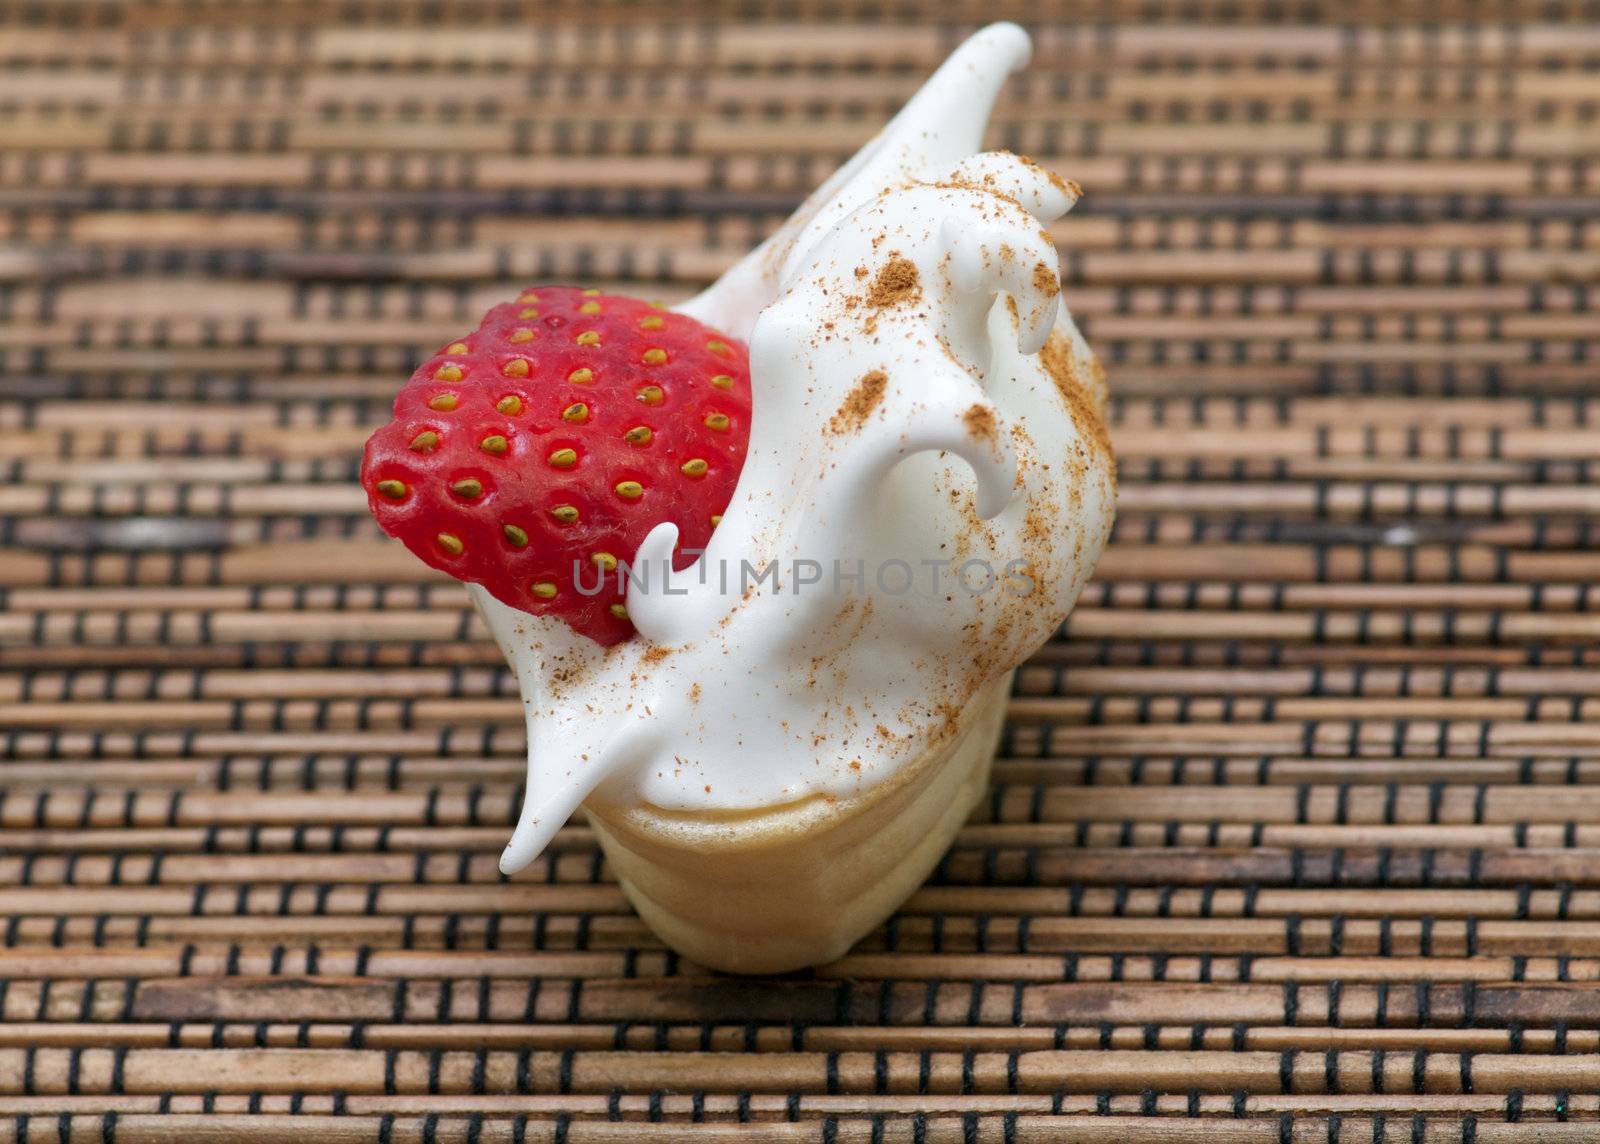 Strawberry Shortcake with Whipped Cream by zhekos